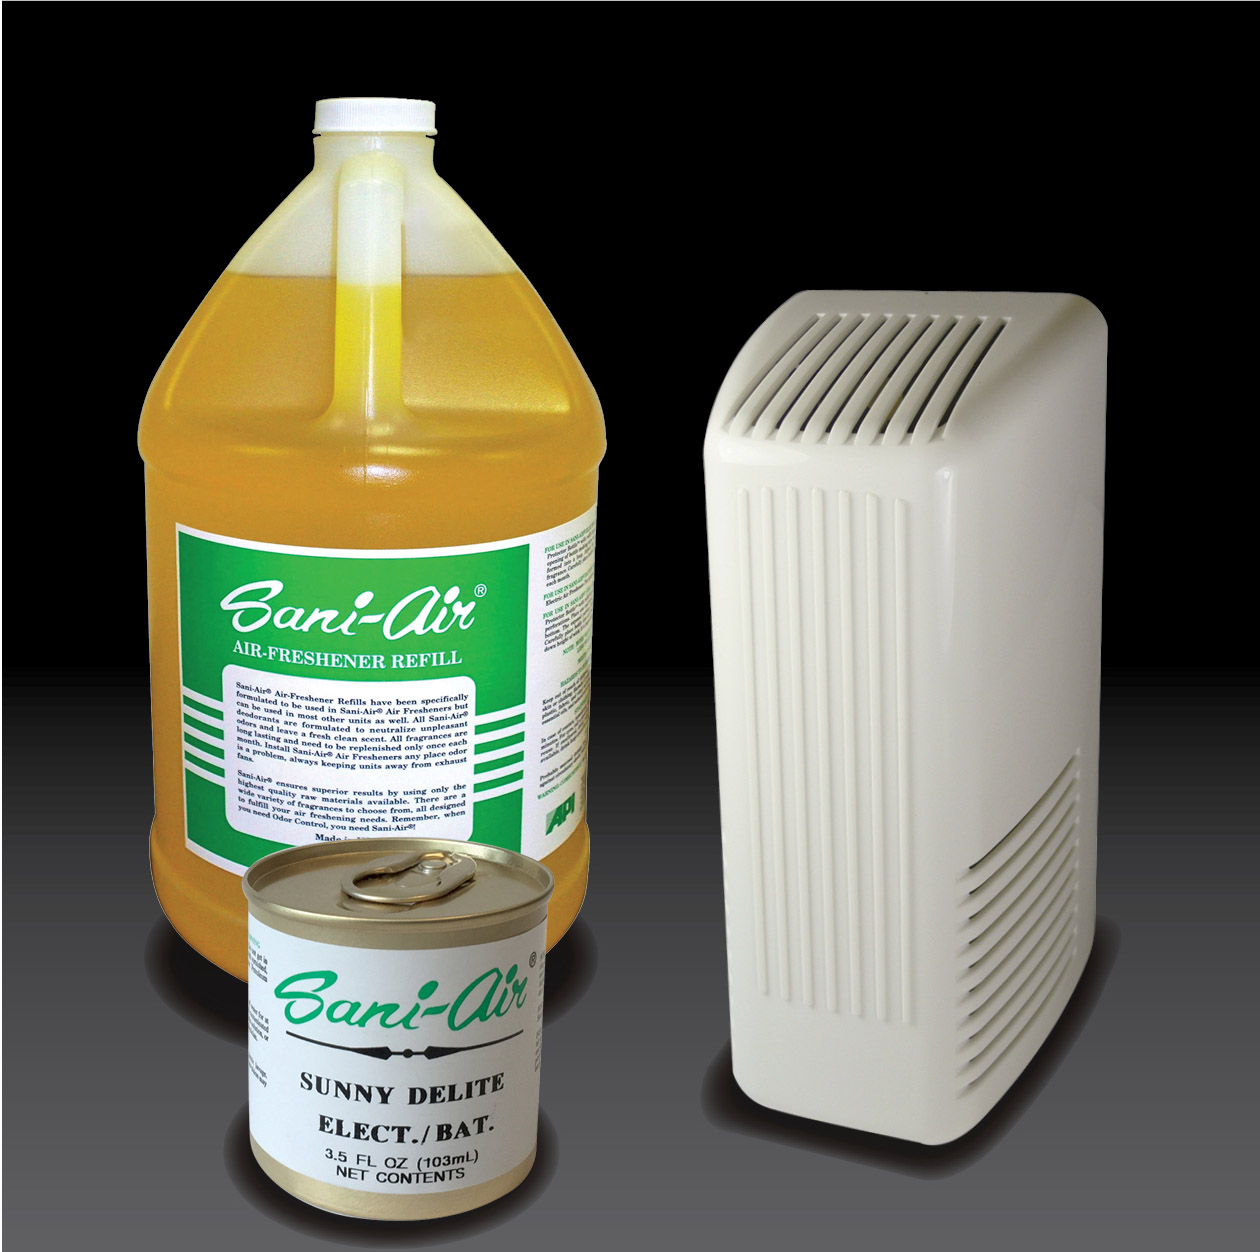 Our API-2000 Air Freshener Diffuser